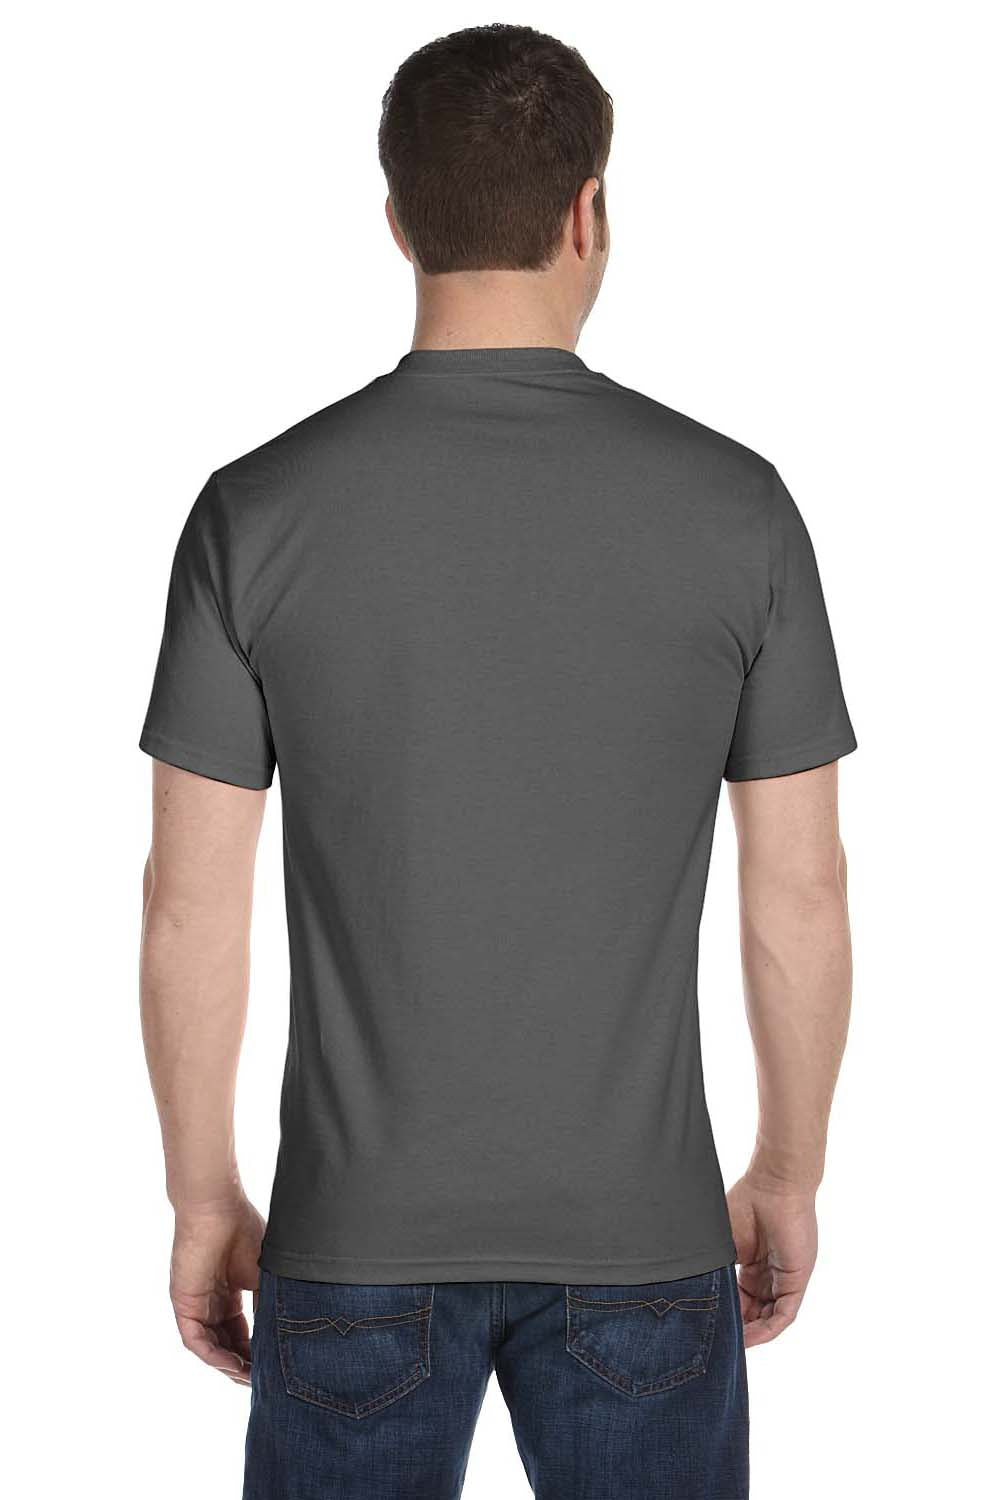 Hanes 5280 Mens ComfortSoft Short Sleeve Crewneck T-Shirt Smoke Grey Back